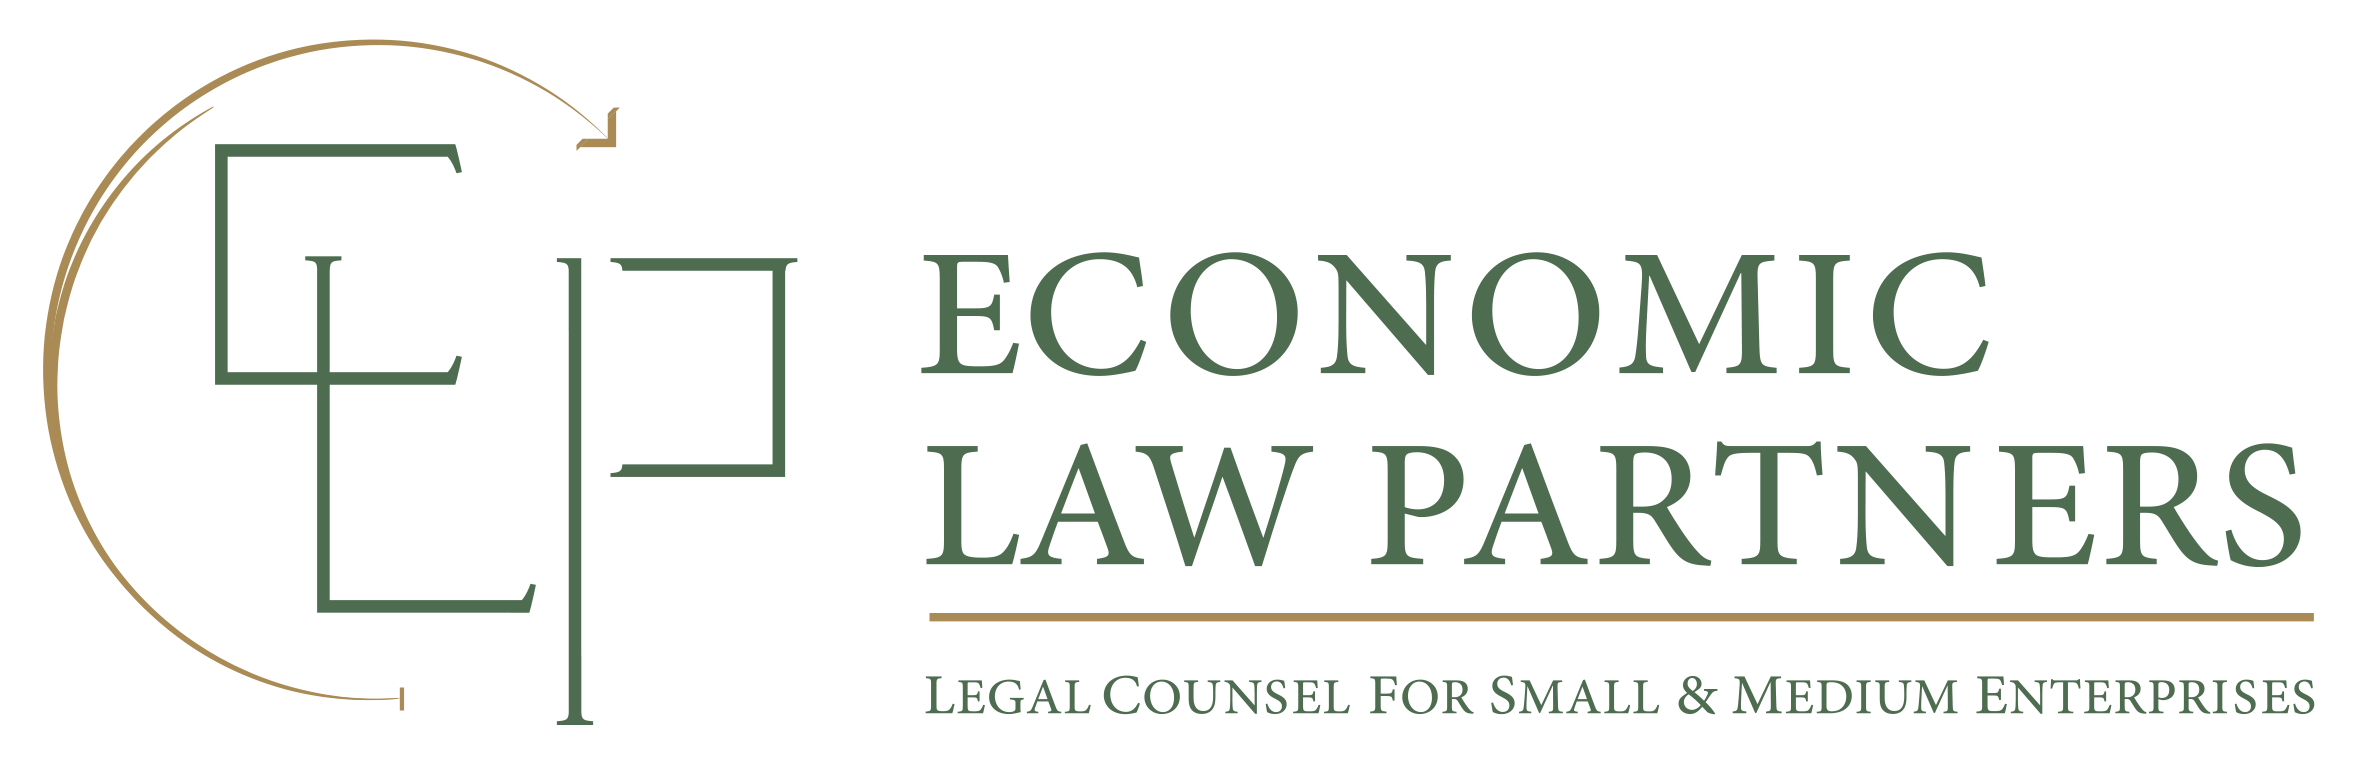 Economic Law Partners LOGO for best law firms in dubai